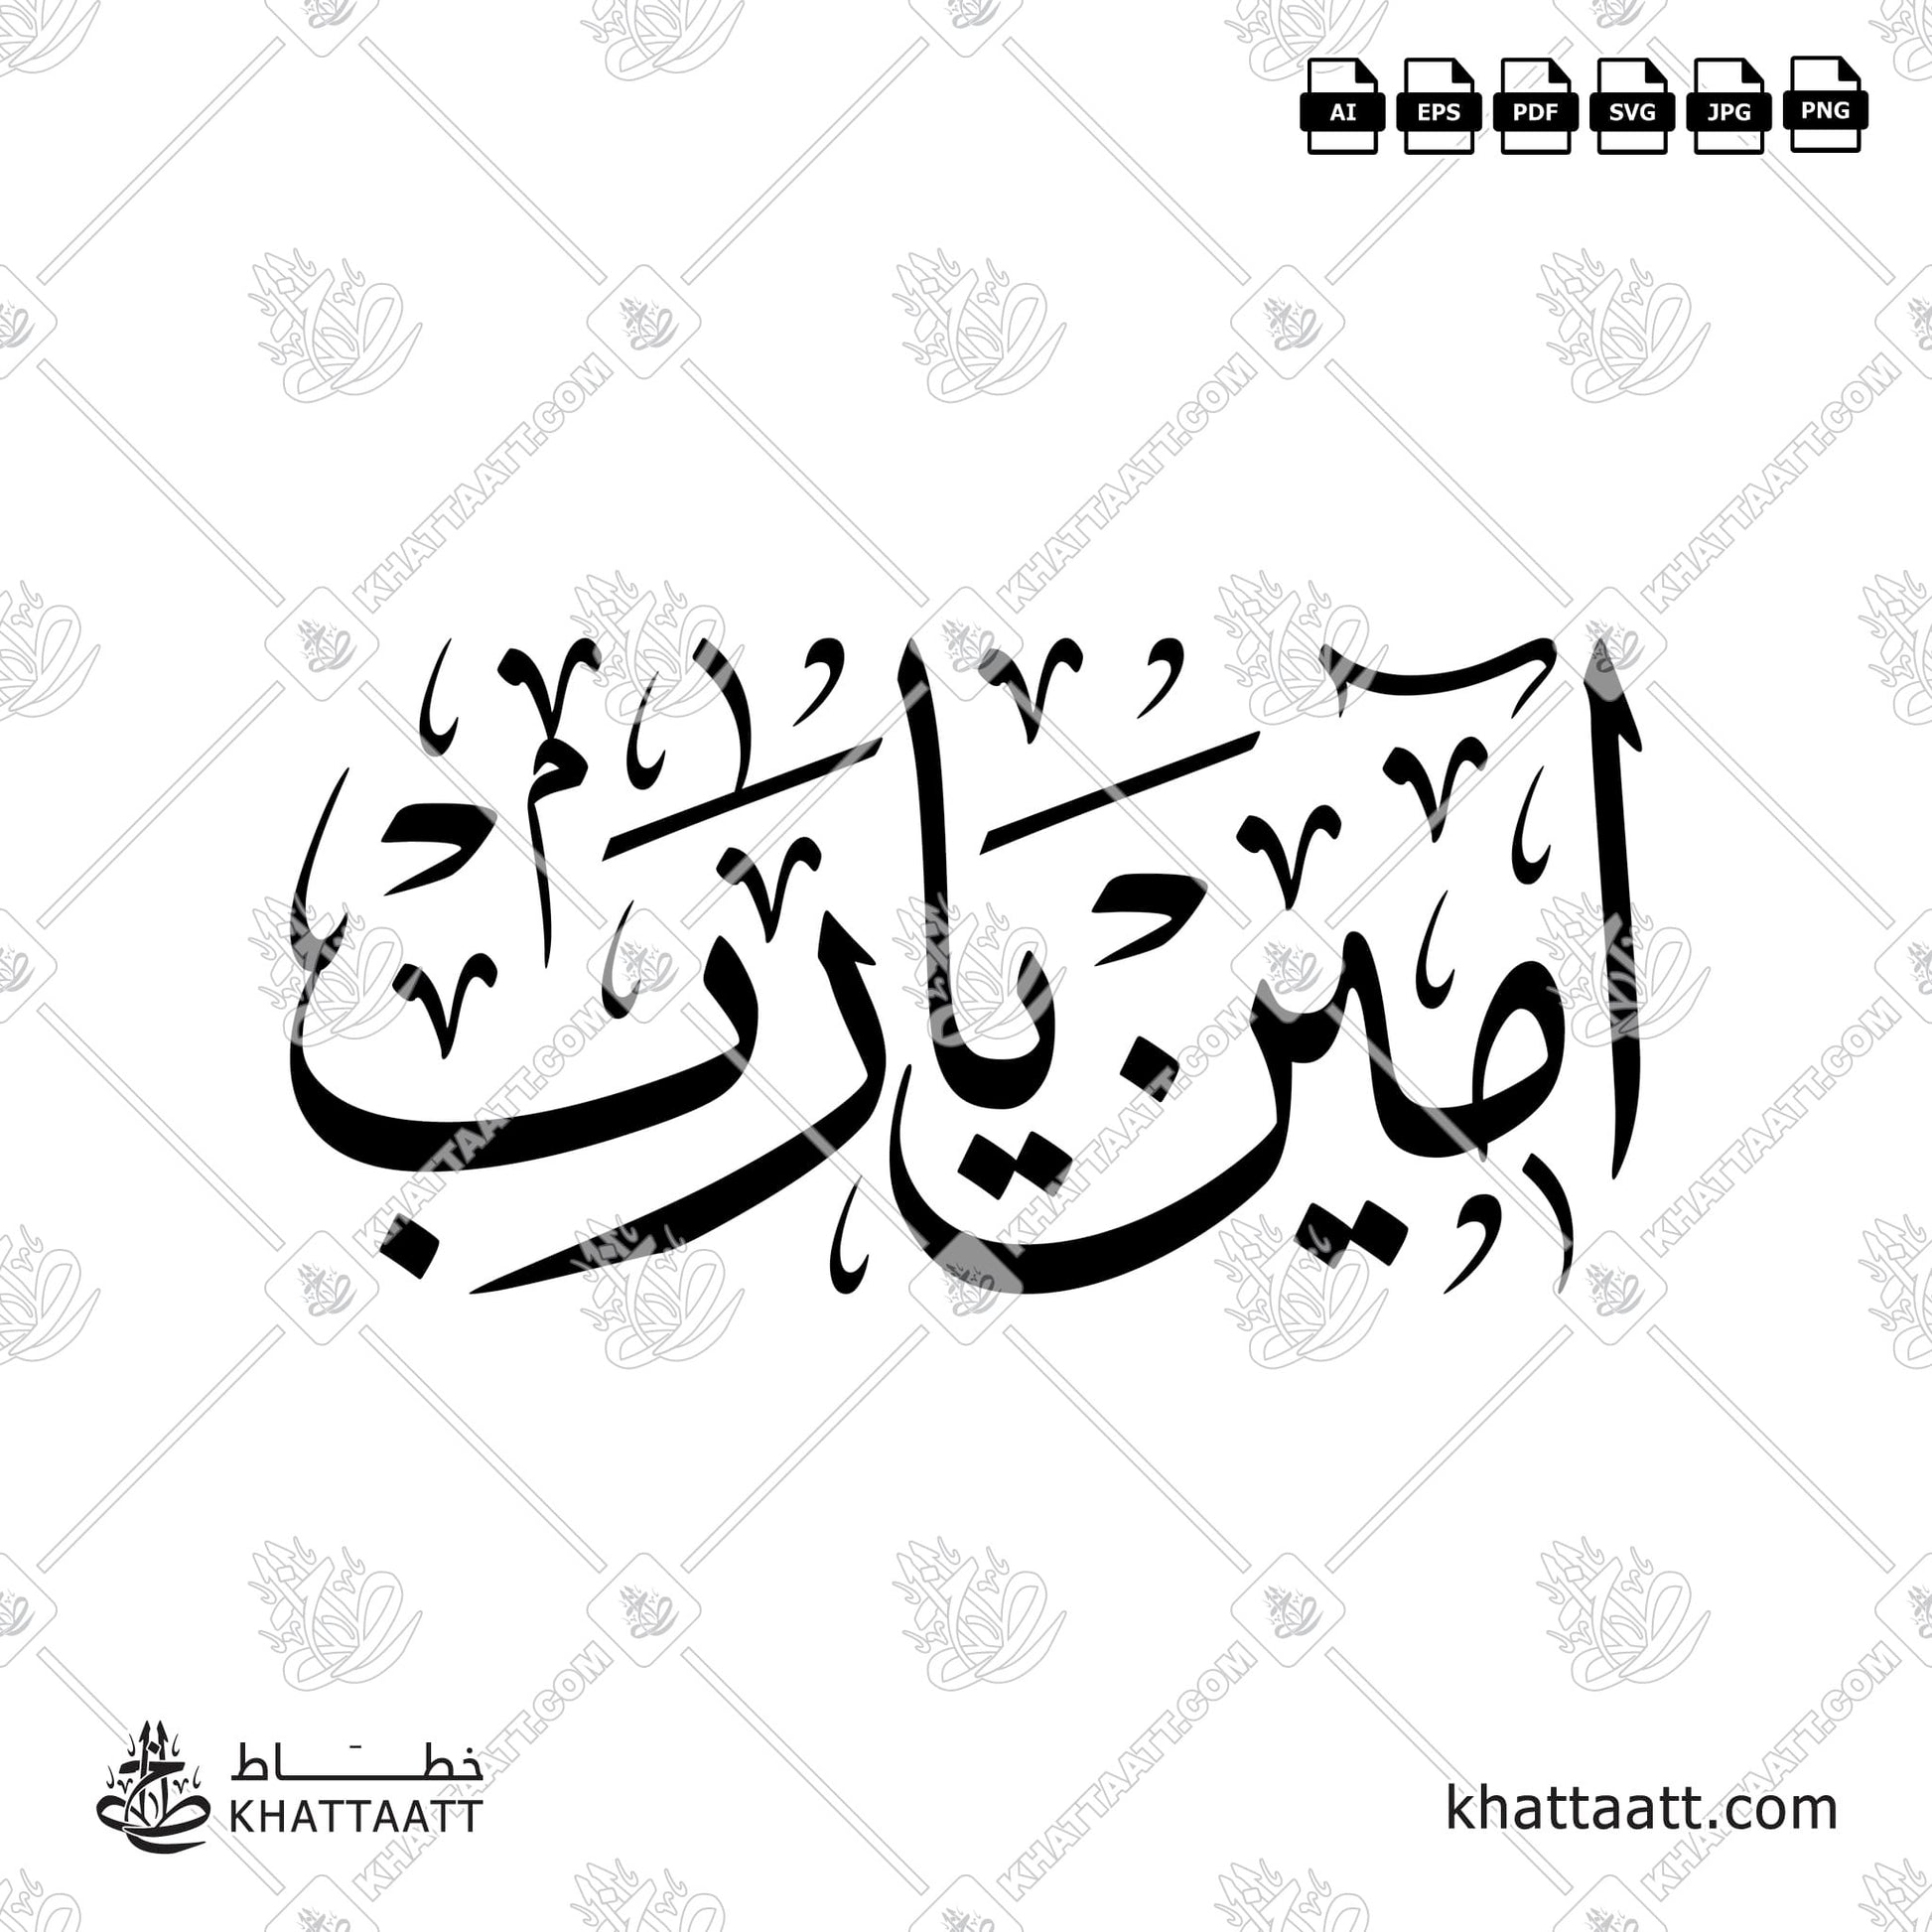 Arabic Calligraphy of Aameen Ya Rab "آمين يا رب", in Thuluth Script "خط الثلث"